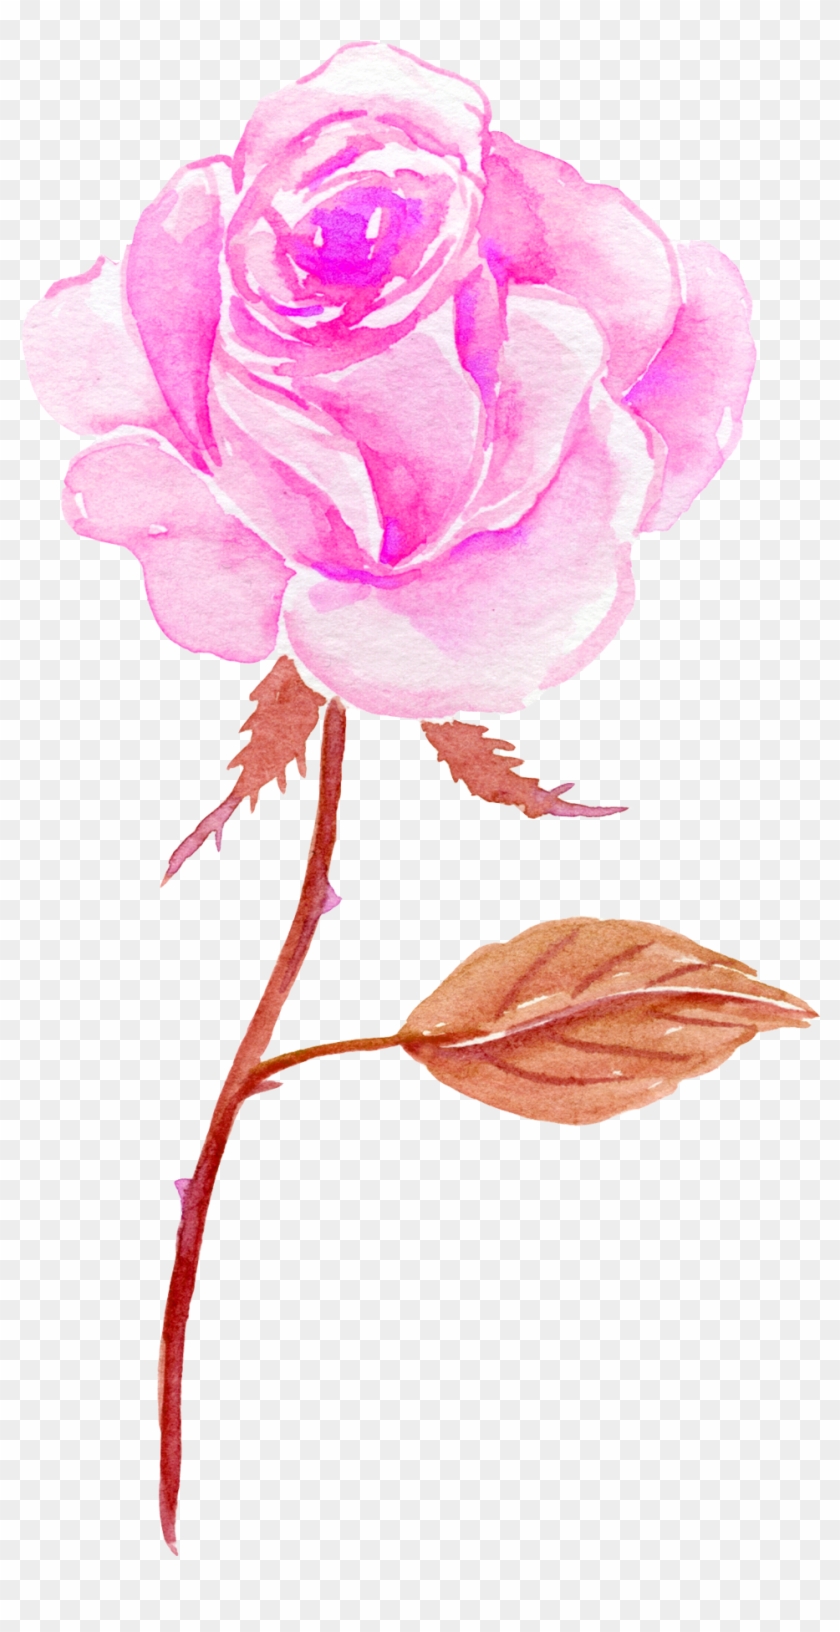 Flower Watercolor Painting - Flower Watercolor Painting #348207